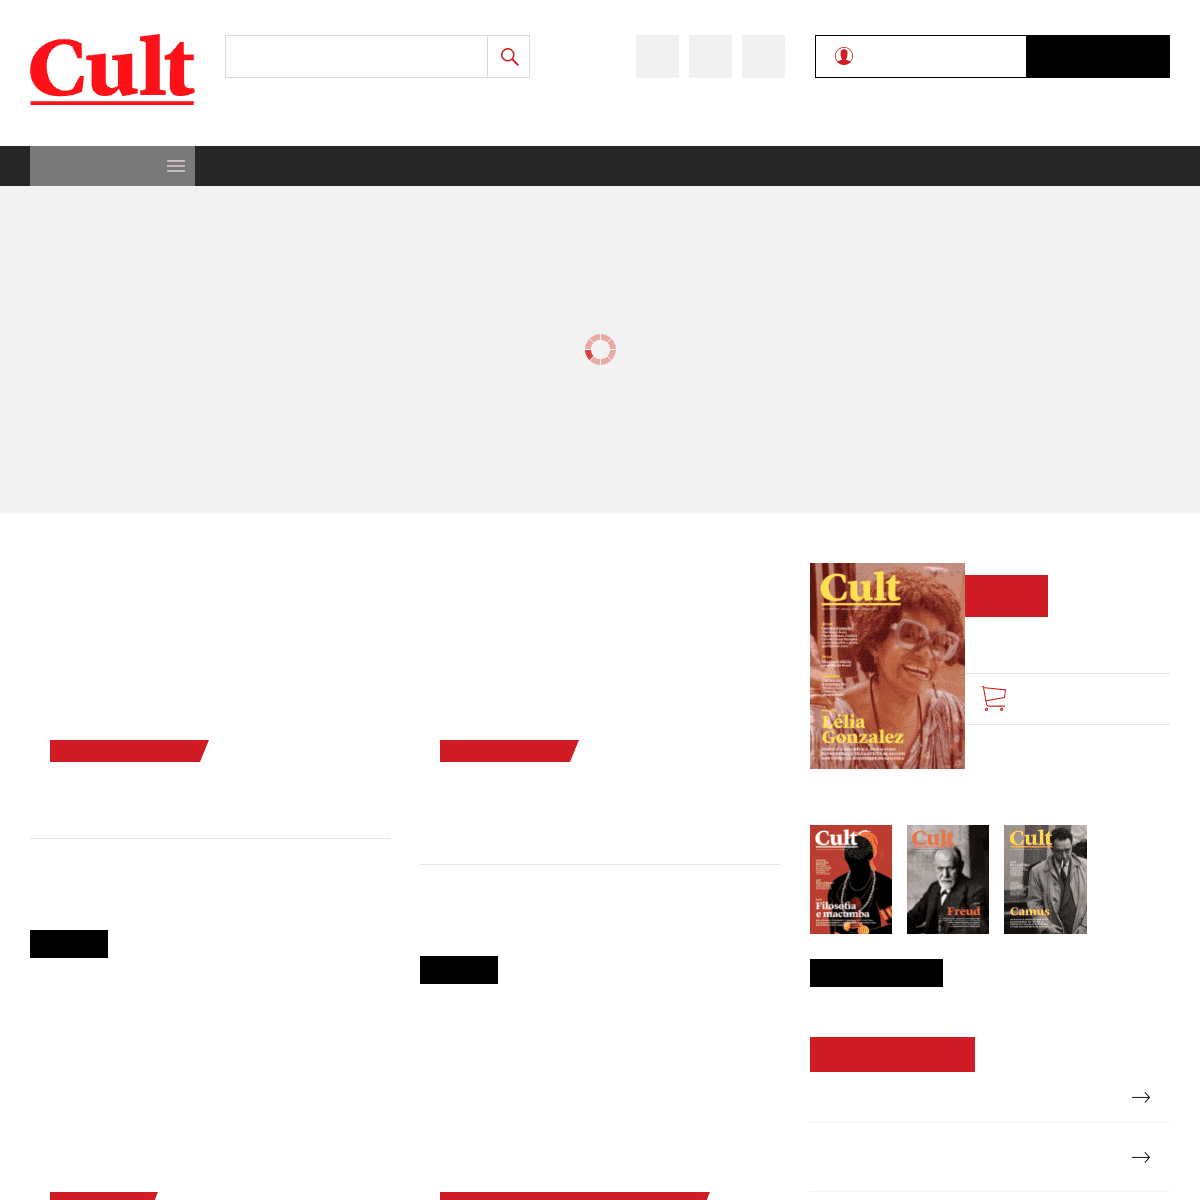 A complete backup of revistacult.uol.com.br